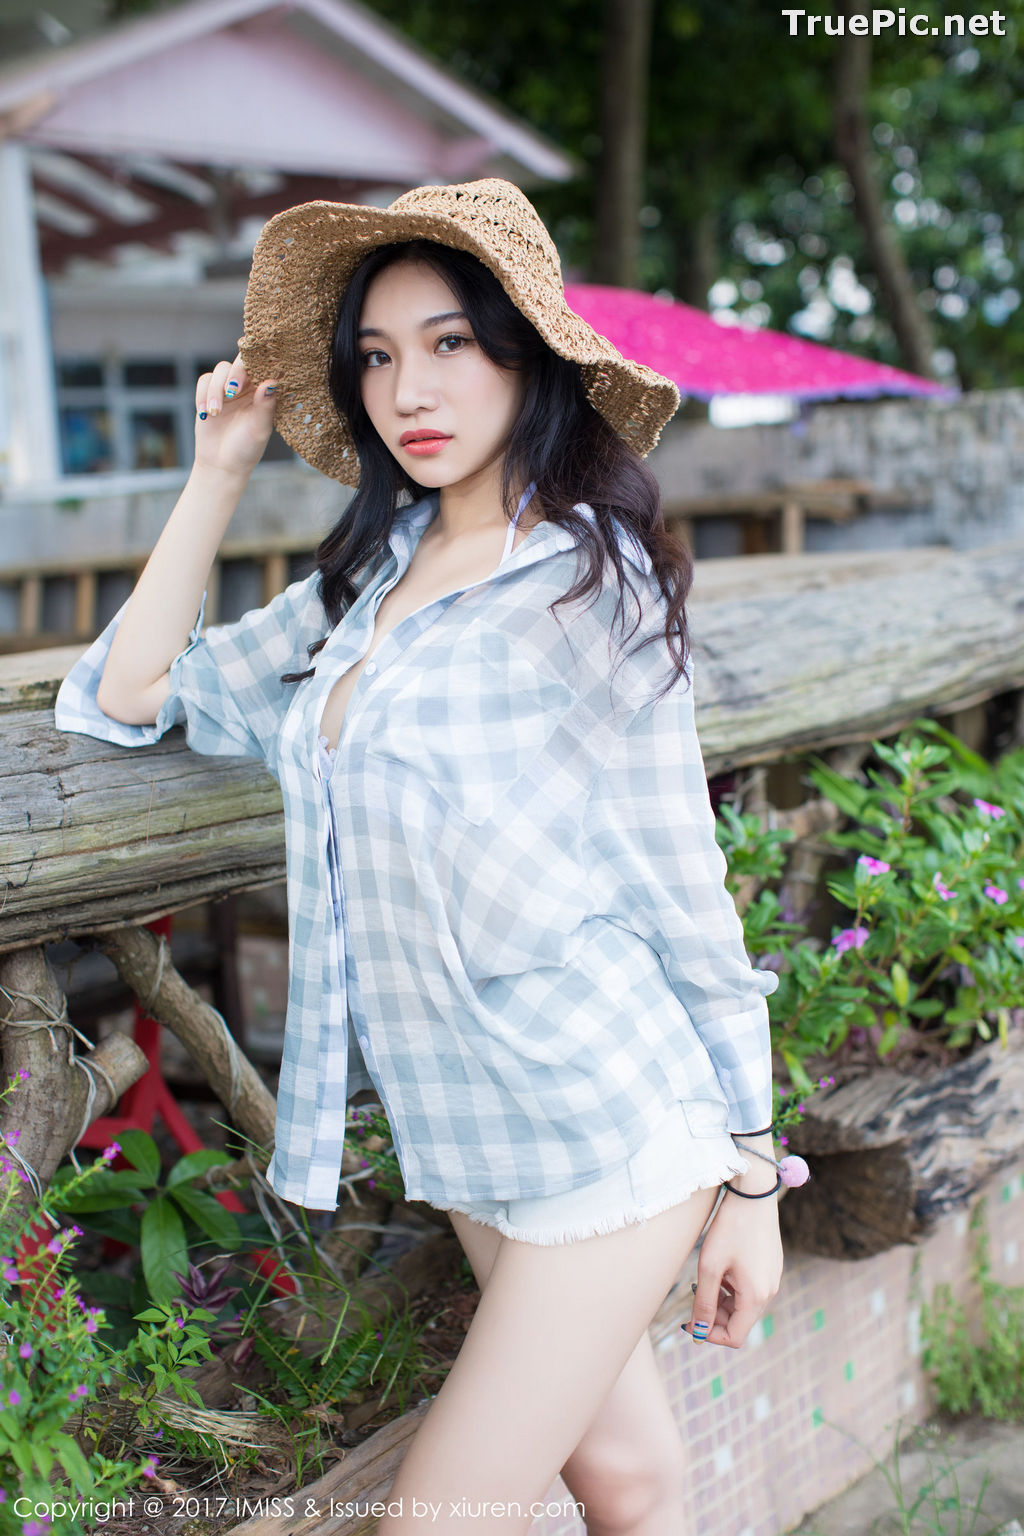 Image IMISS Vol.182 – Chinese Model Xiao Hu Li (小狐狸Sica) – Beachwear Fashion - TruePic.net - Picture-22